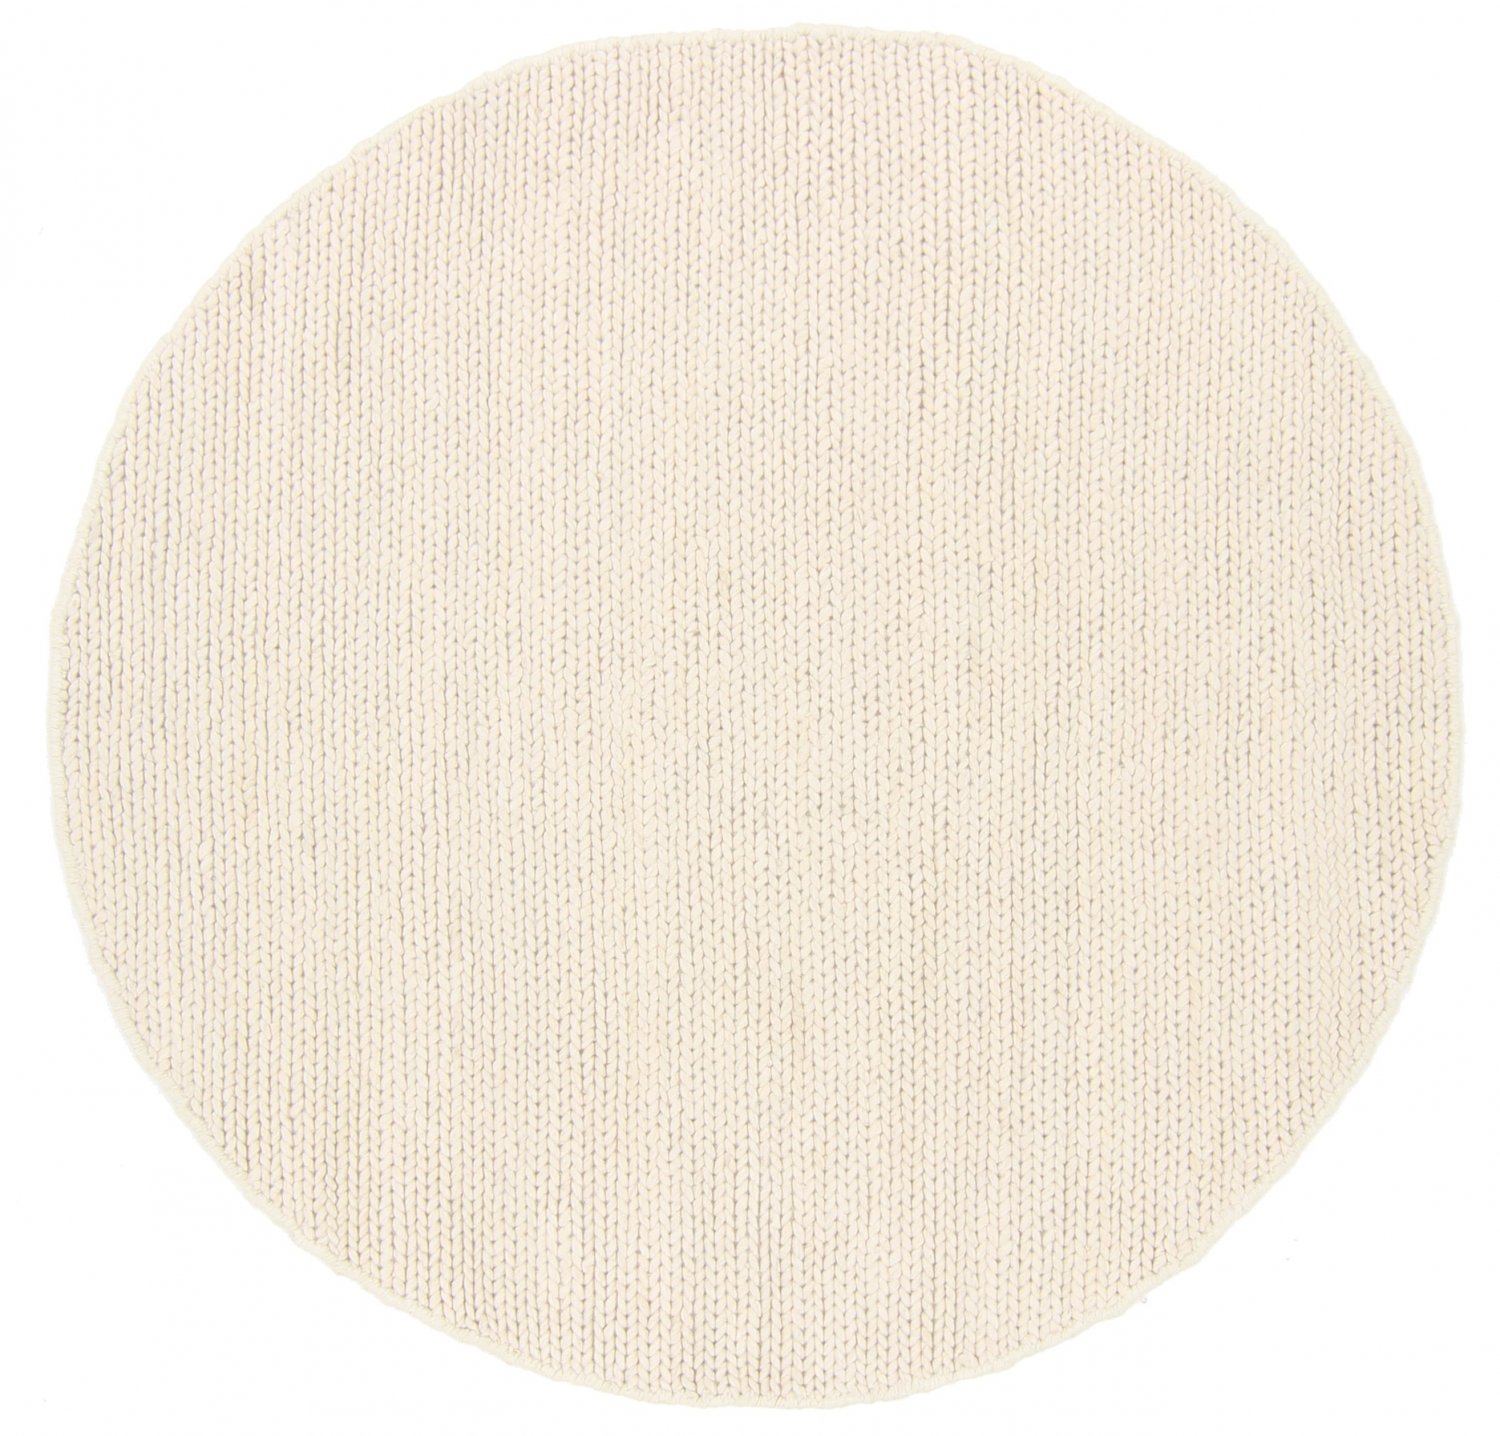 Round rug - Lynmouth
(cream)